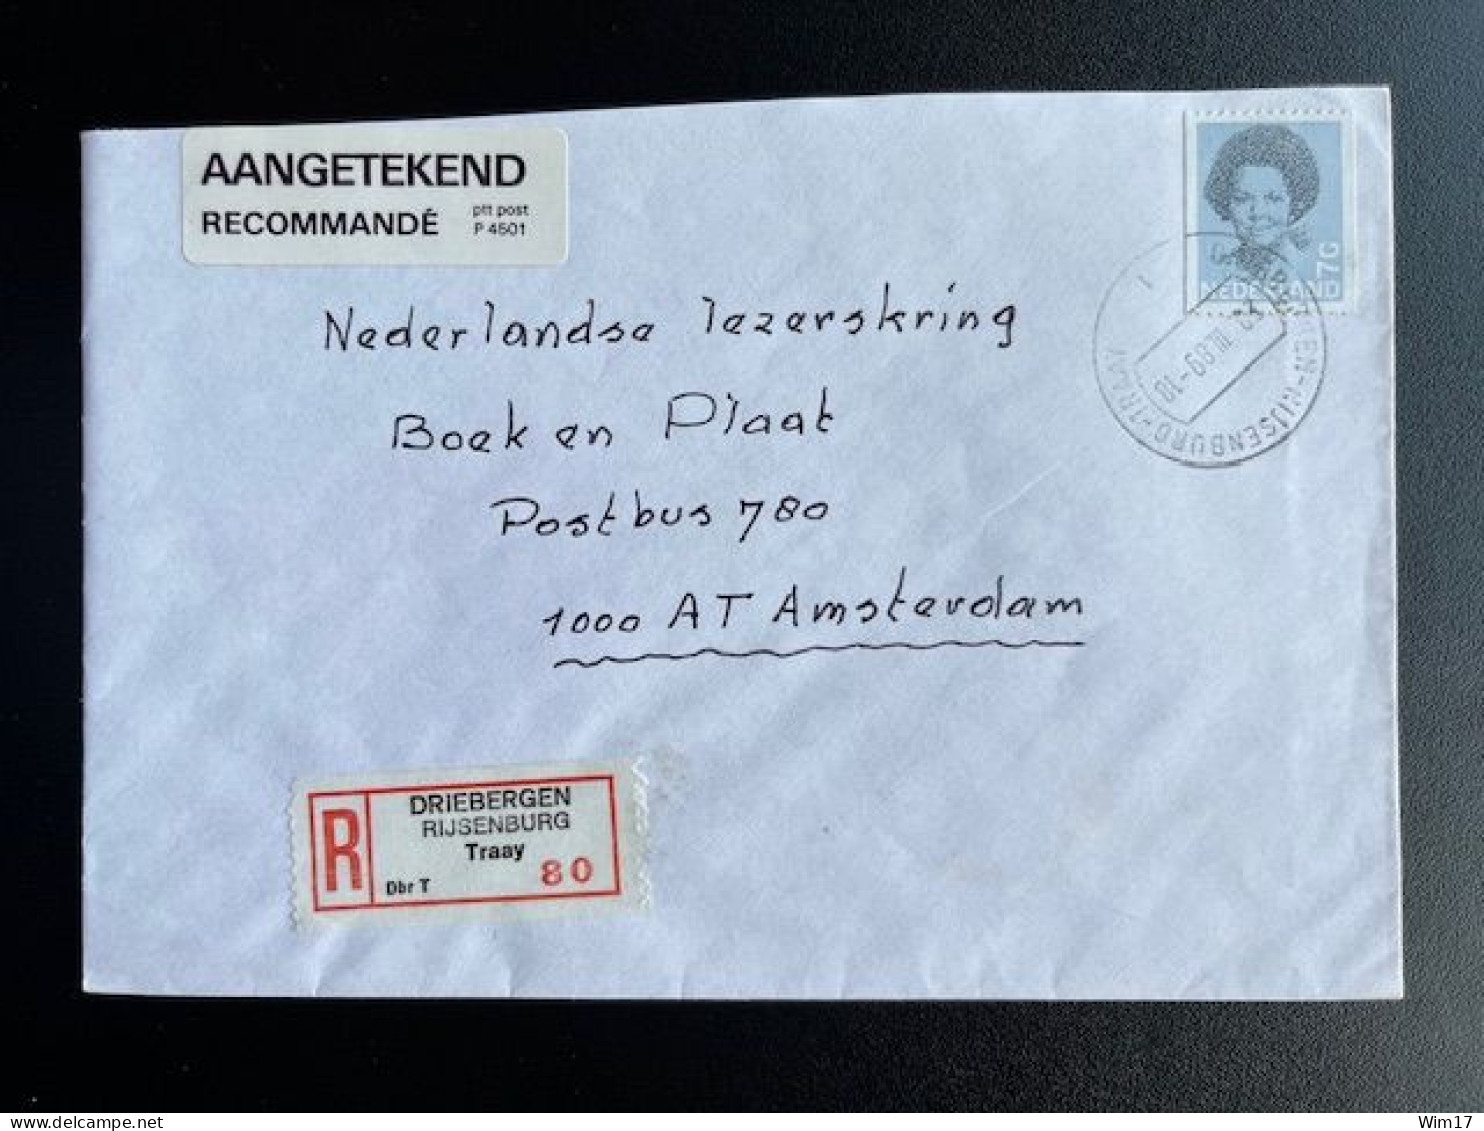 NETHERLANDS 1989 REGISTERED LETTER DRIEBERGEN RIJSENBURG TRAAY TO AMSTERDAM 28-03-1989 NEDERLAND AANGETEKEND - Storia Postale